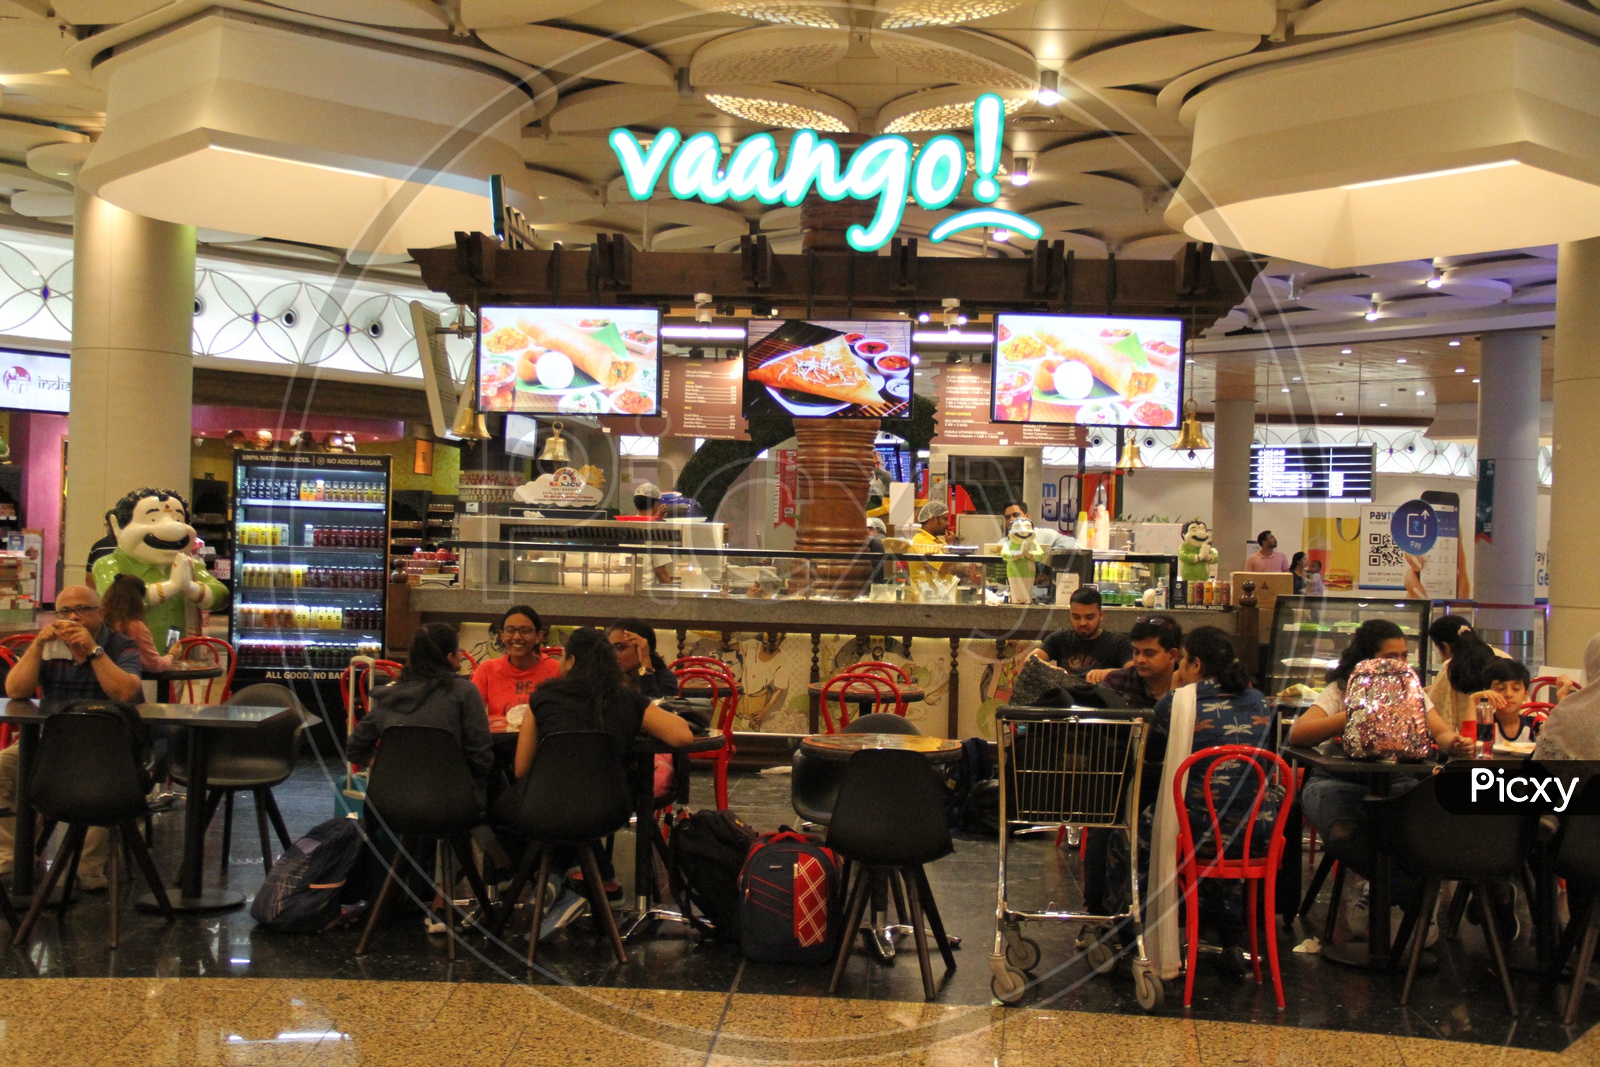 Travelers Eating Food at Vaango Restaurant